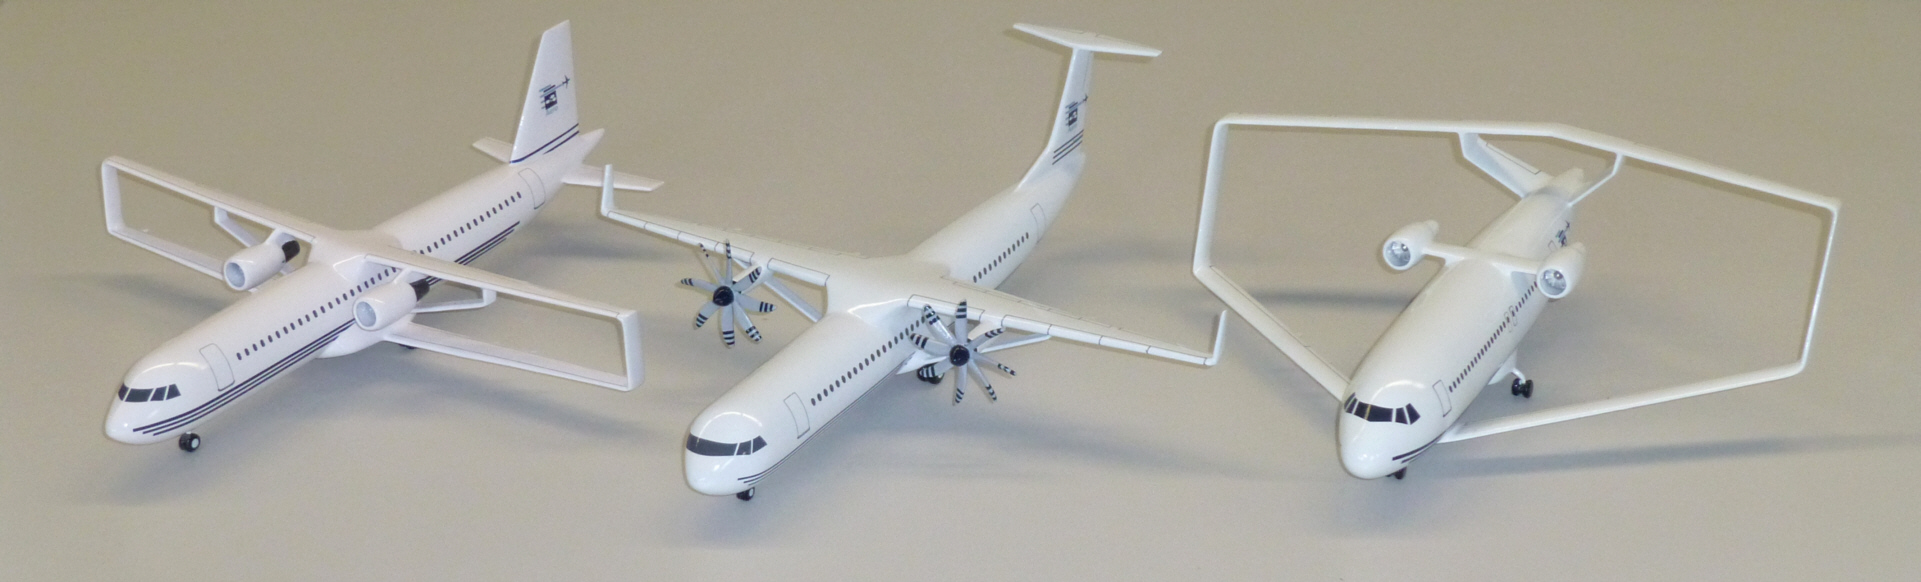 3 Aircraft Models